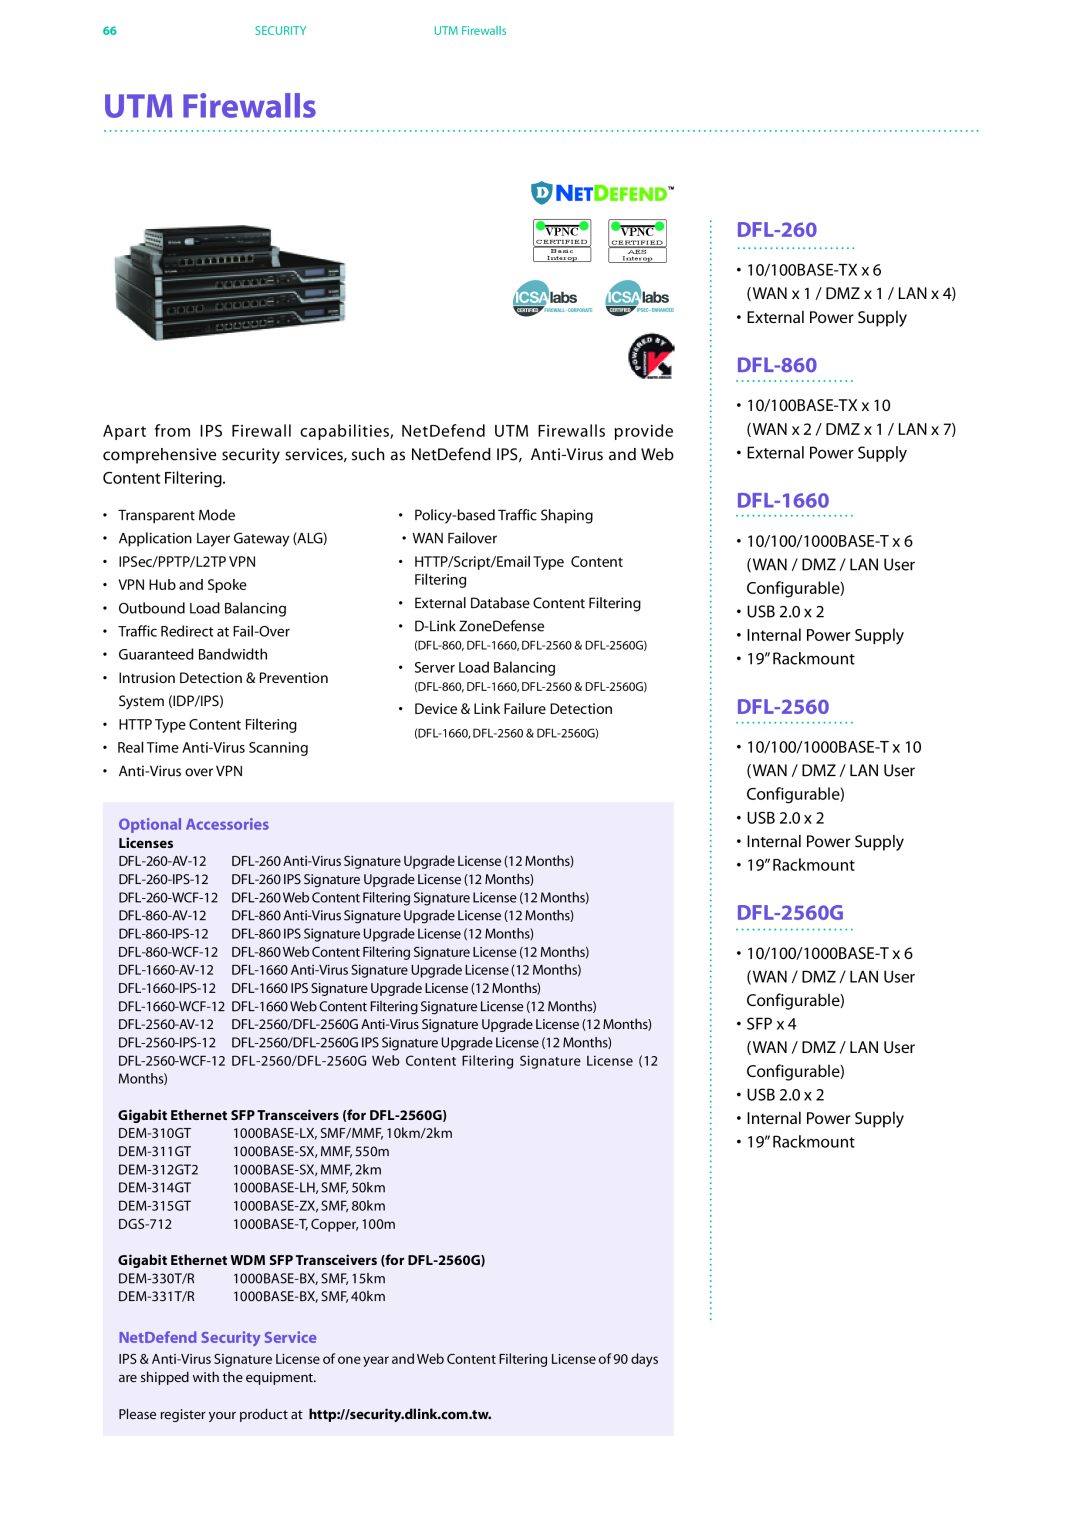 D-Link DES-7200 UTM Firewalls, DFL-260, DFL-860, DFL-1660, DFL-2560G, Optional Accessories, NetDefend Security Service 